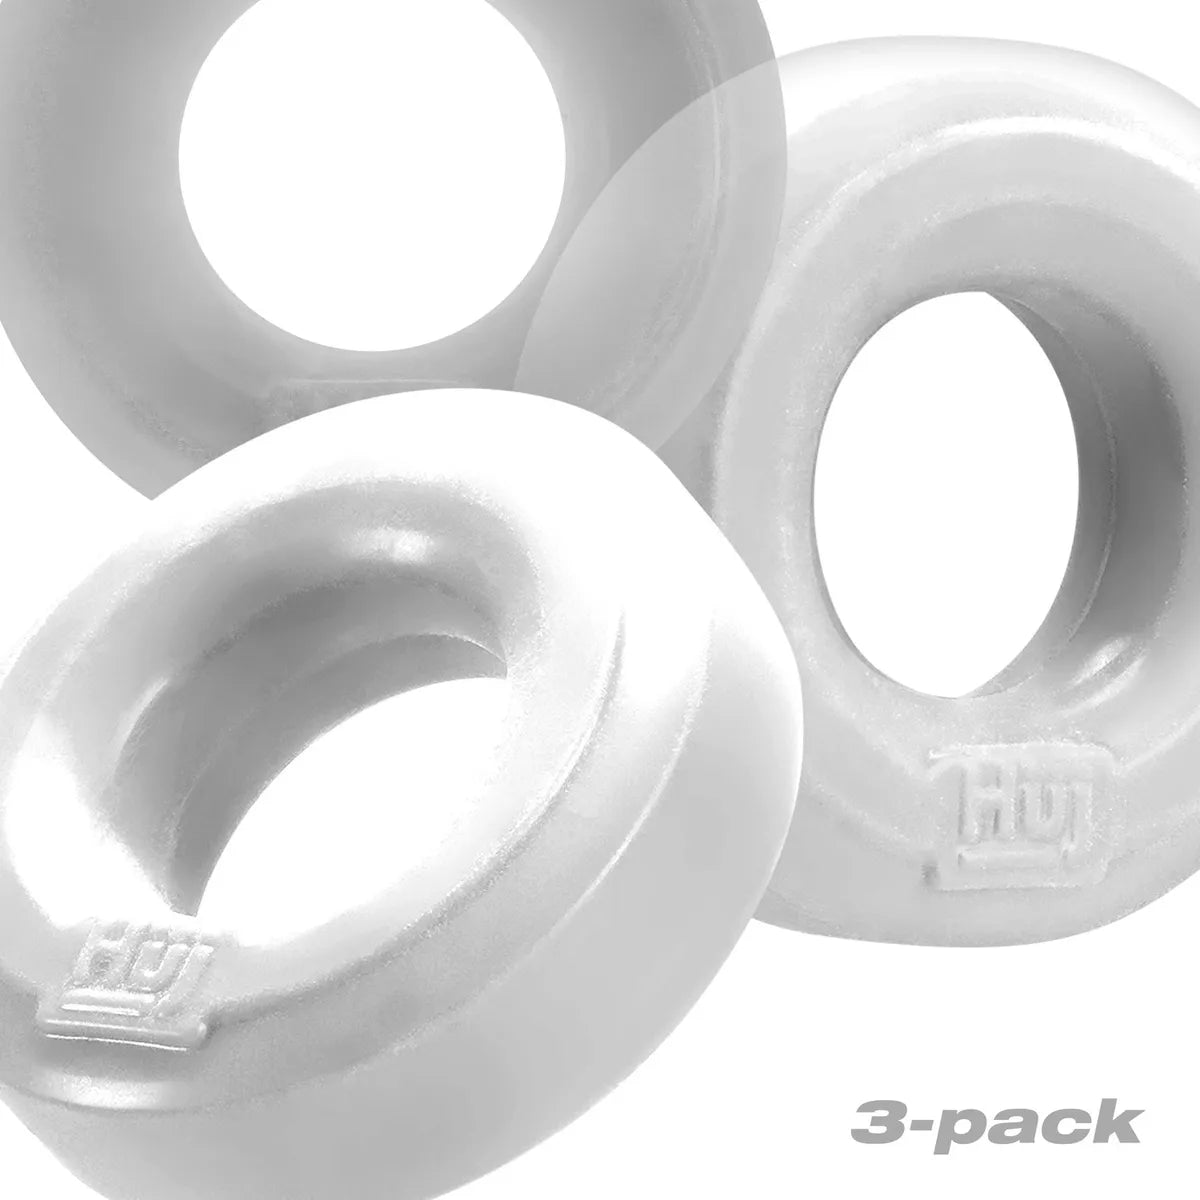 HUJ c-ring 3-pack clear/white